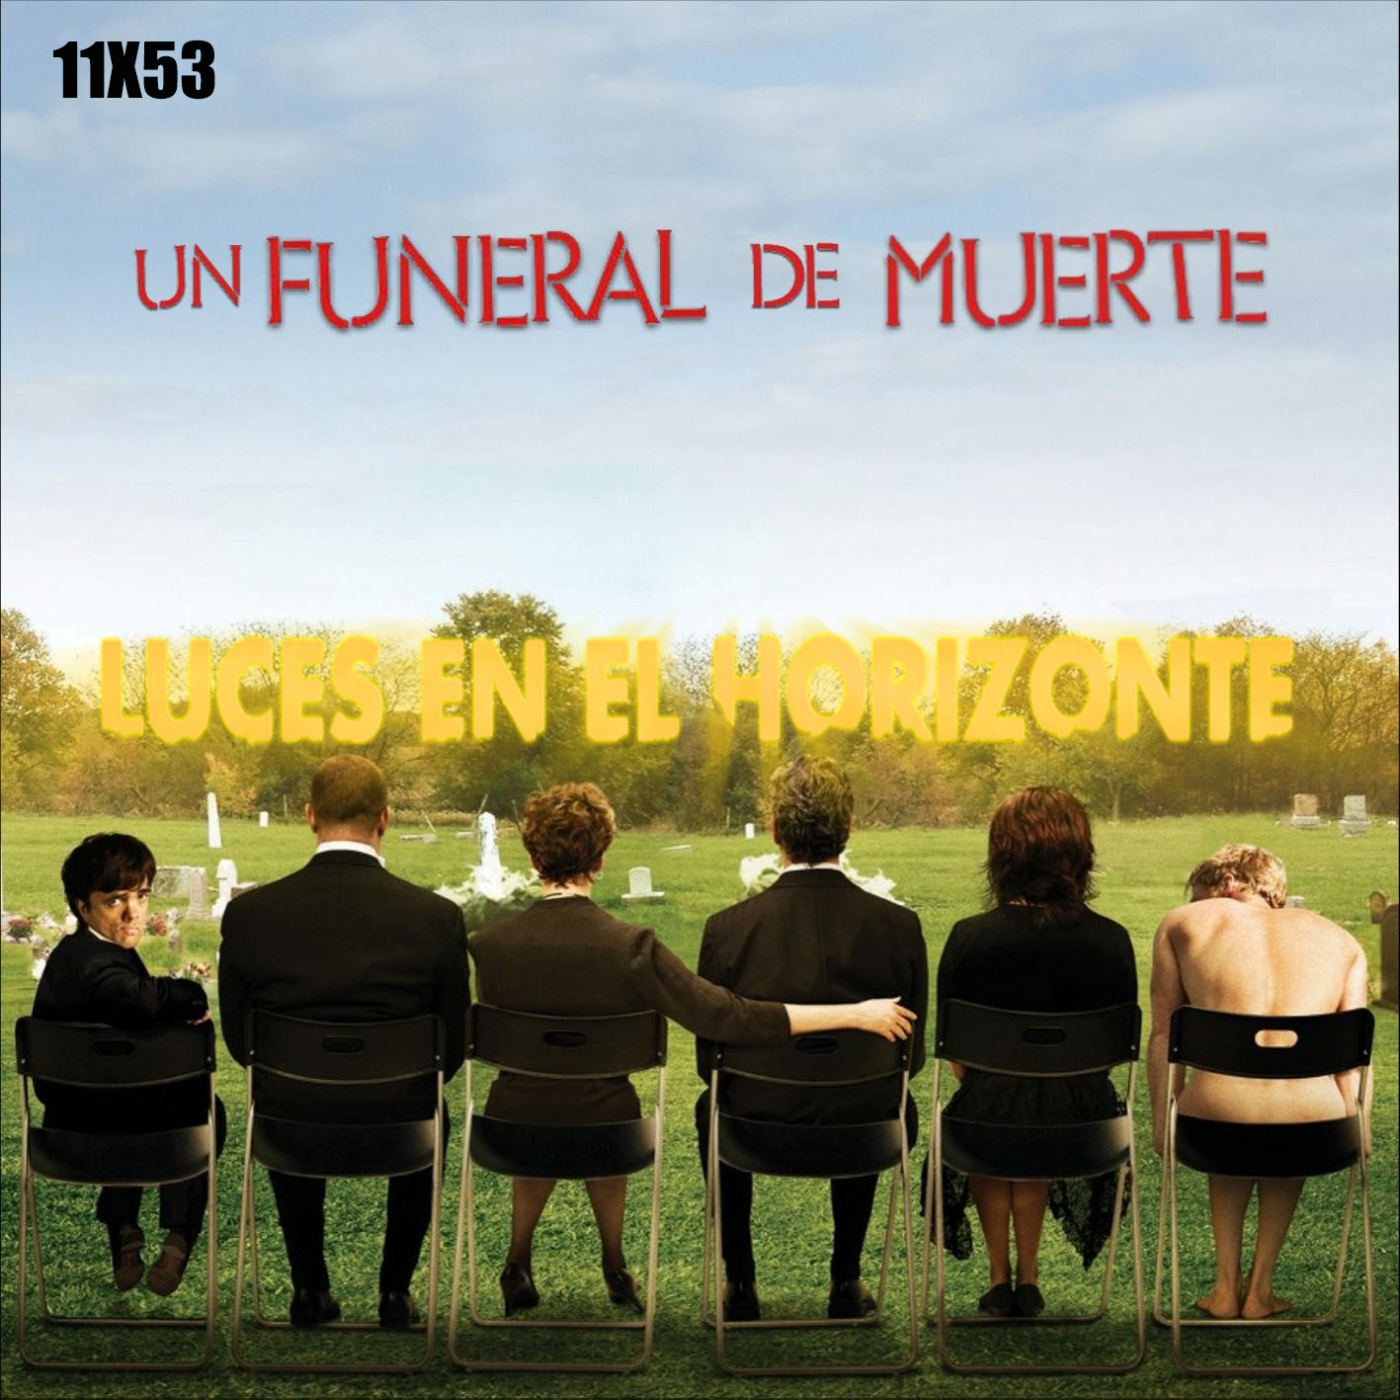 Un funeral de muerte - Luces en el Horizonte 11x53